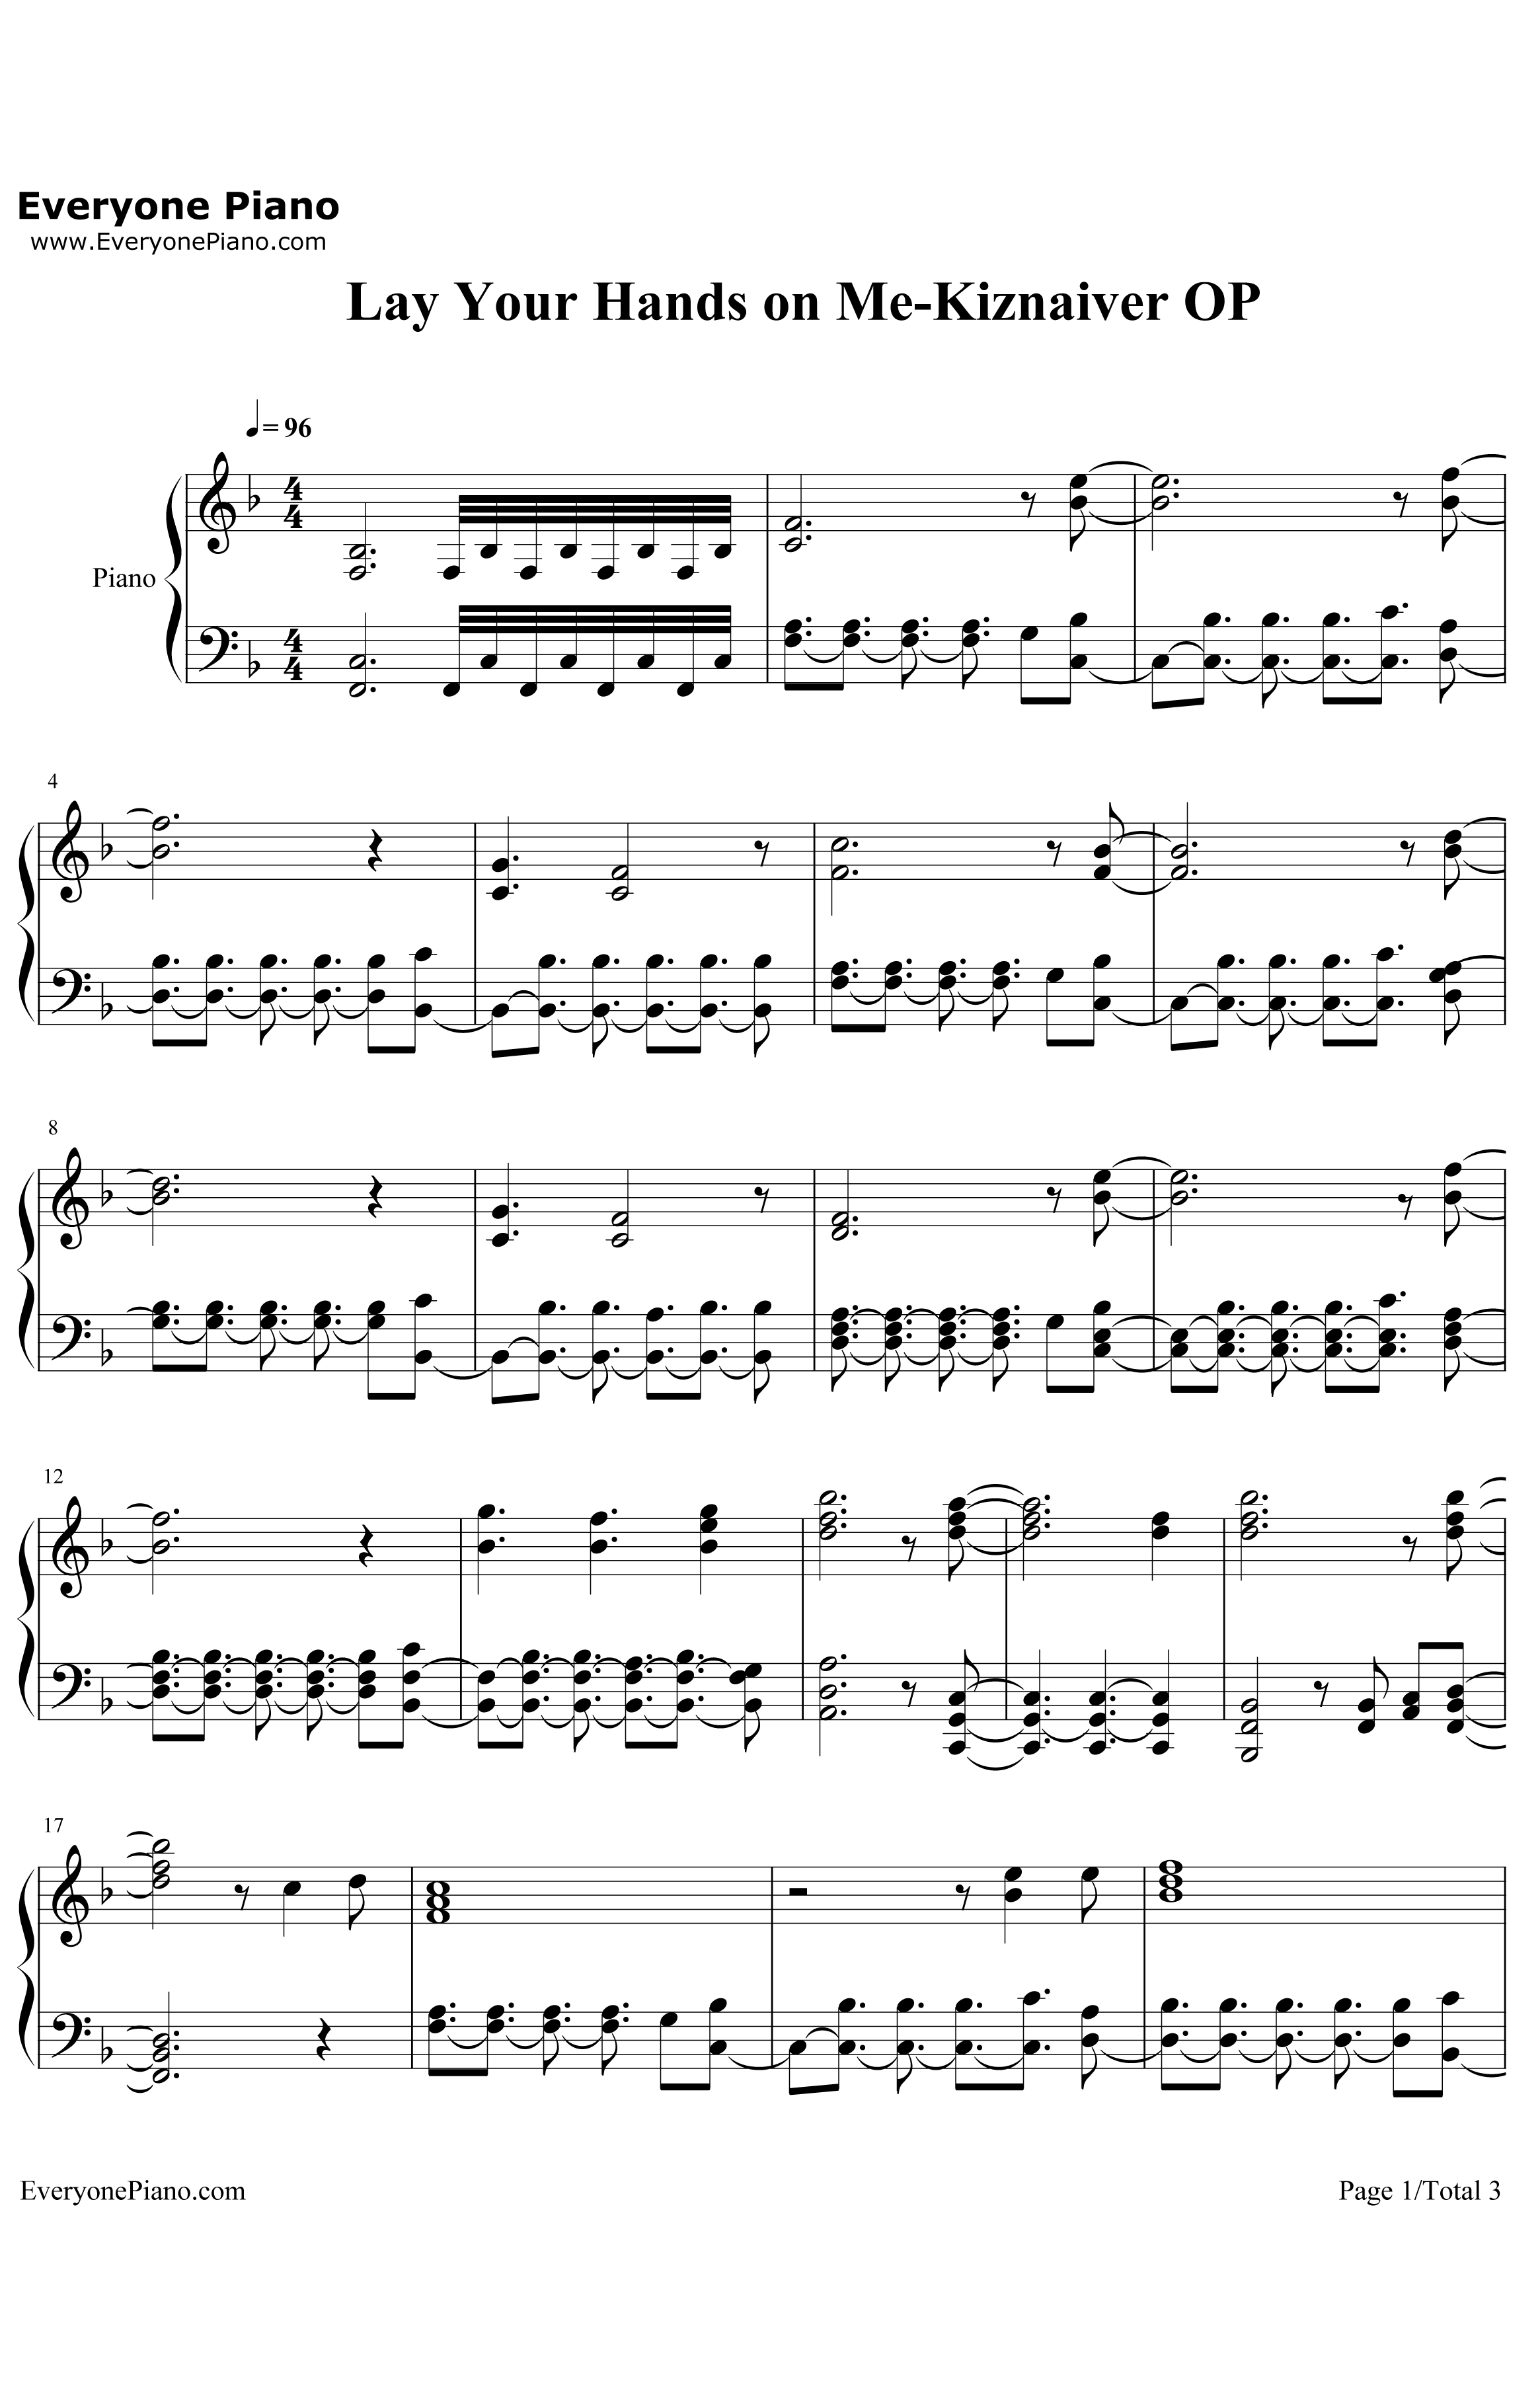 LayYourHandsonMe钢琴谱-BoomBoomSatellites-KiznaiverOP1